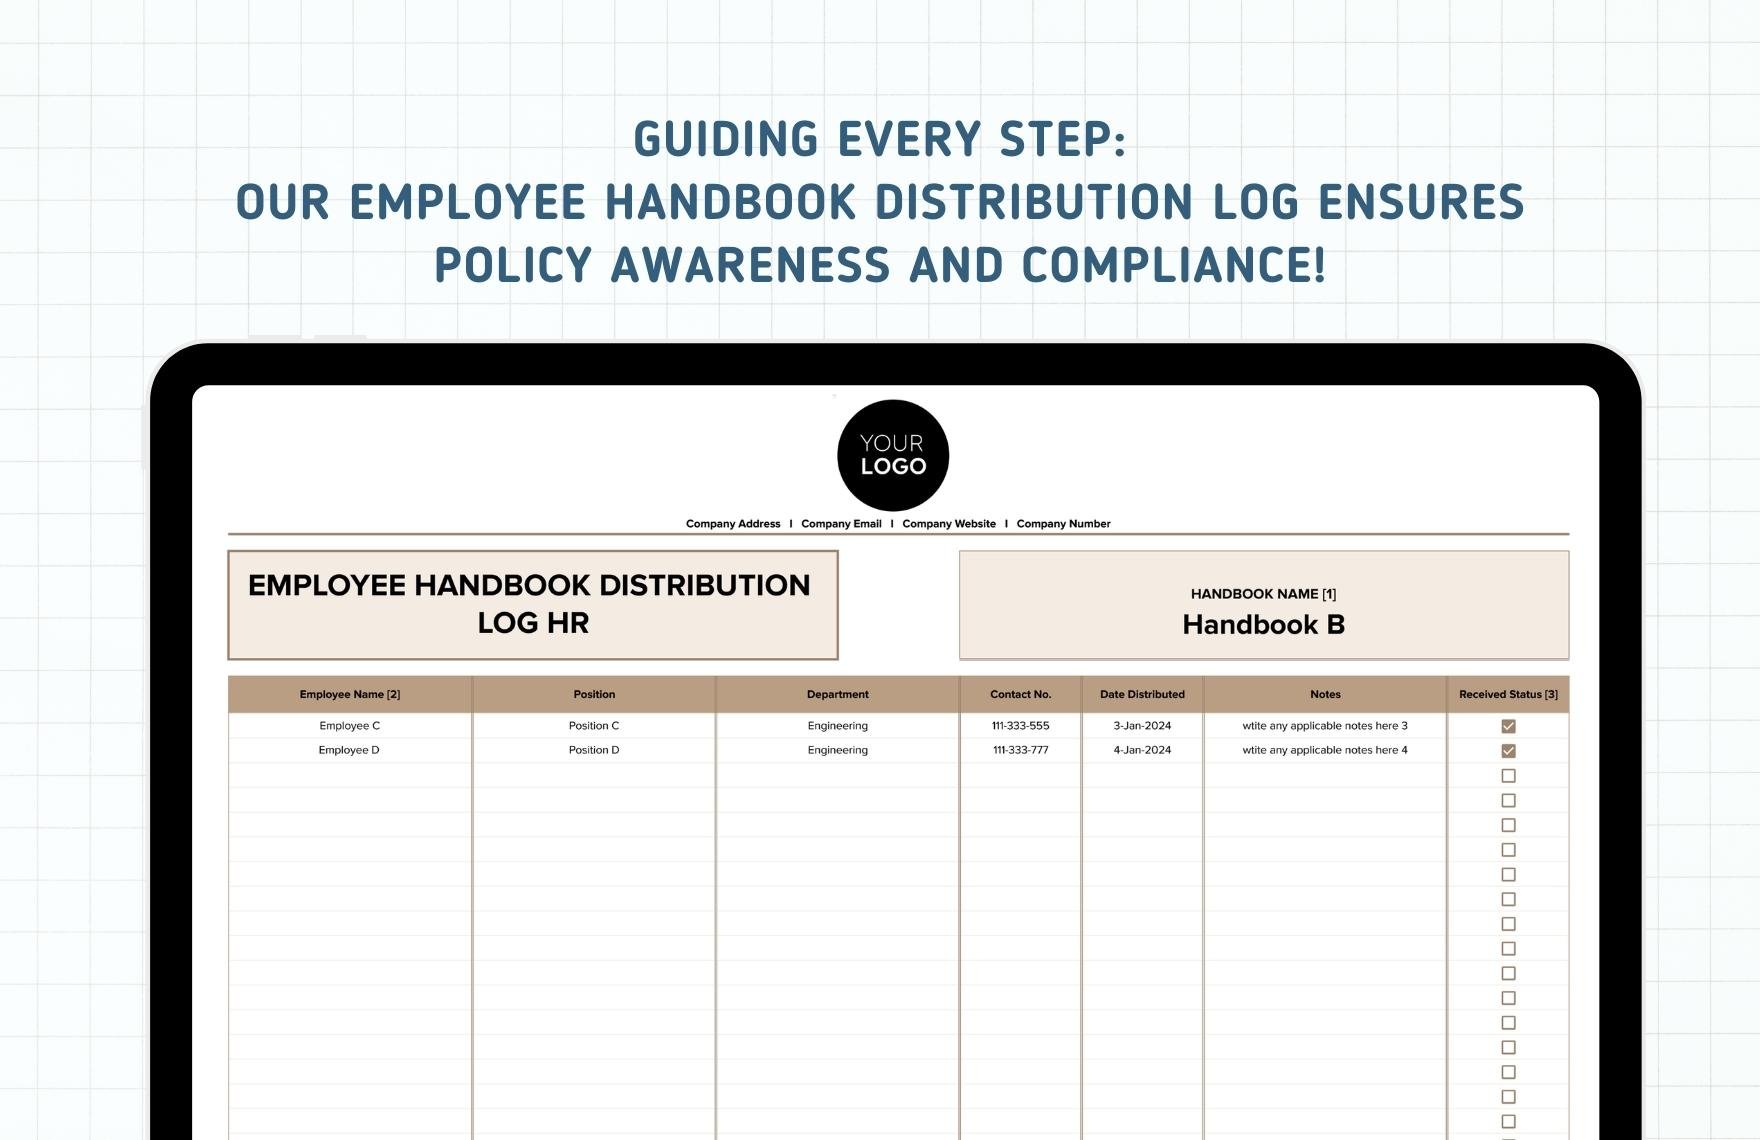 Employee Handbook Distribution Log HR Template